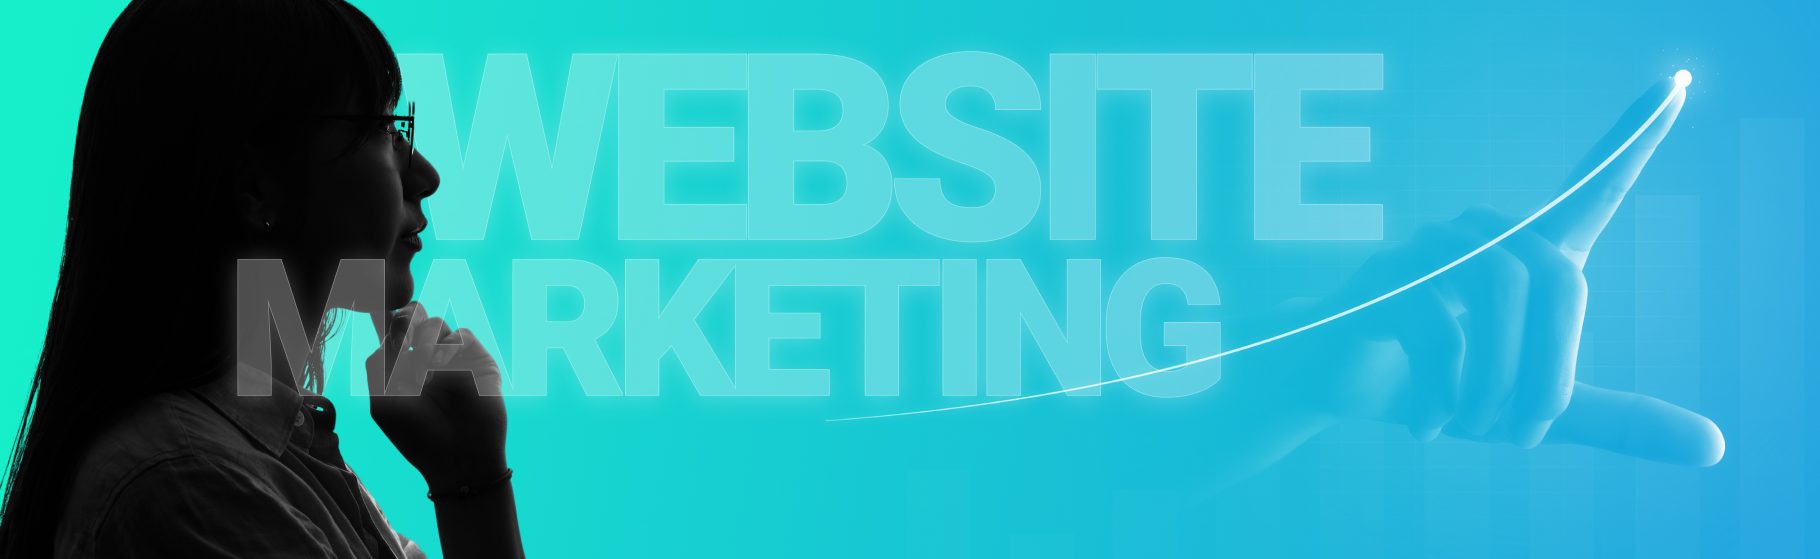 Web design company services website marketing